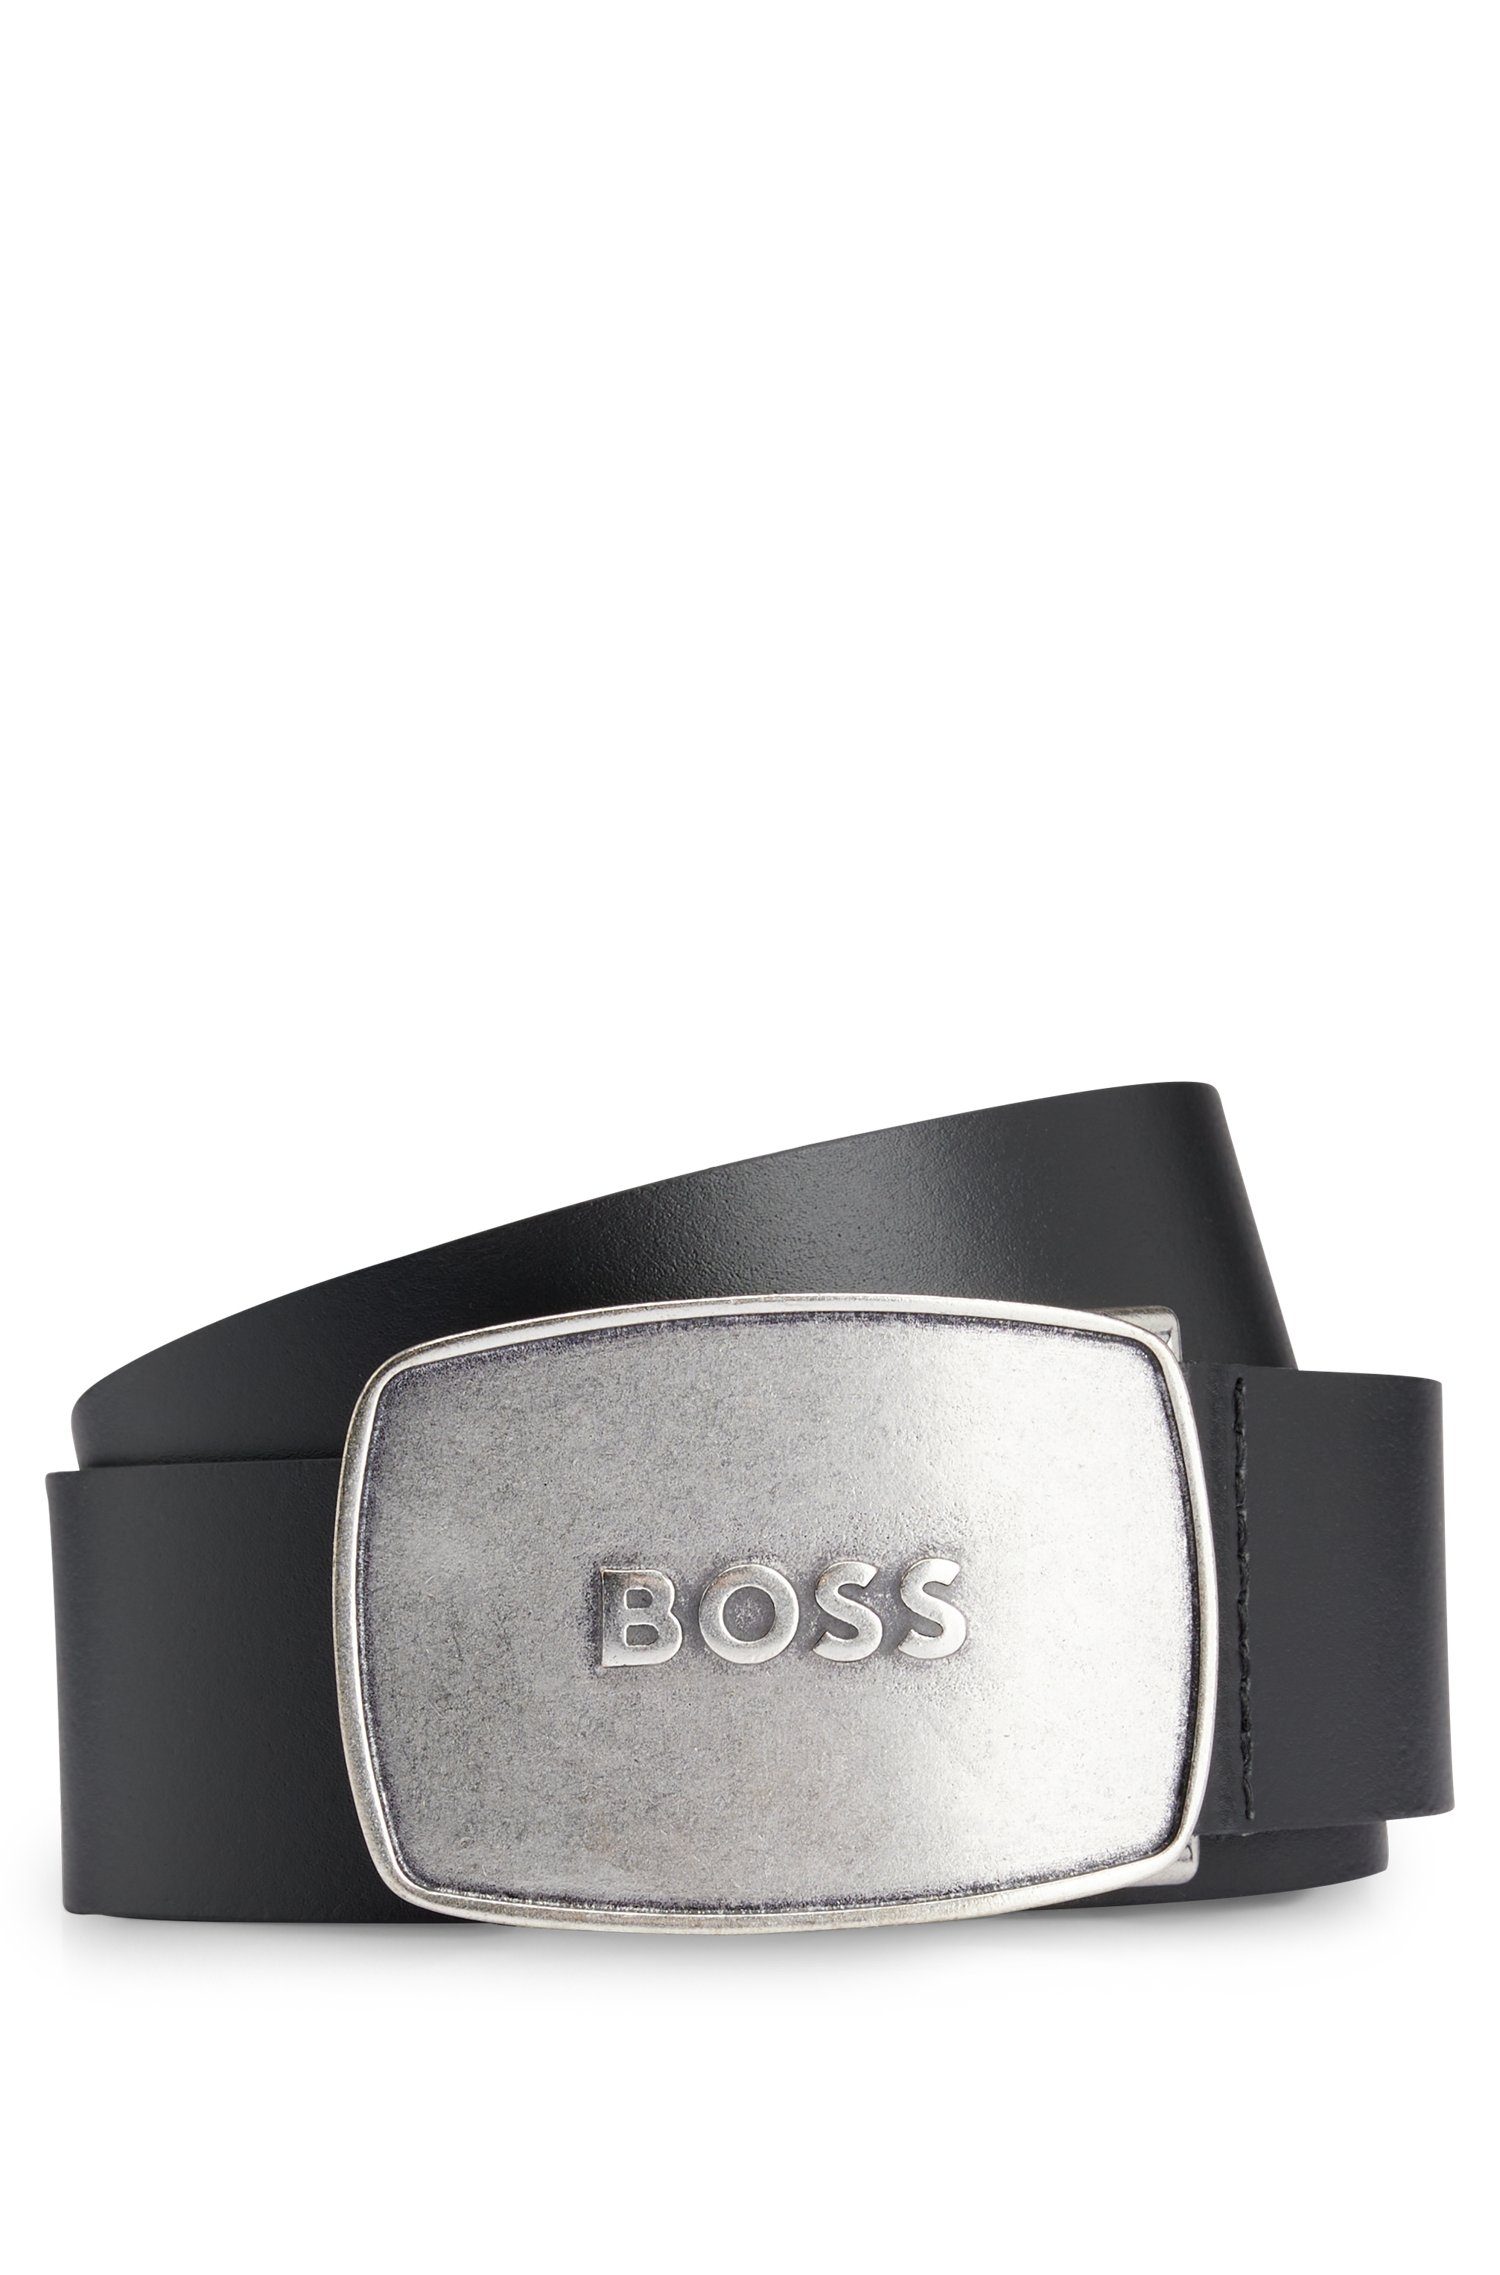 BOSS Ledergürtel mit Metall Logo-Schnalle aus Boss_Icon-EP_Sz40 auffälliger